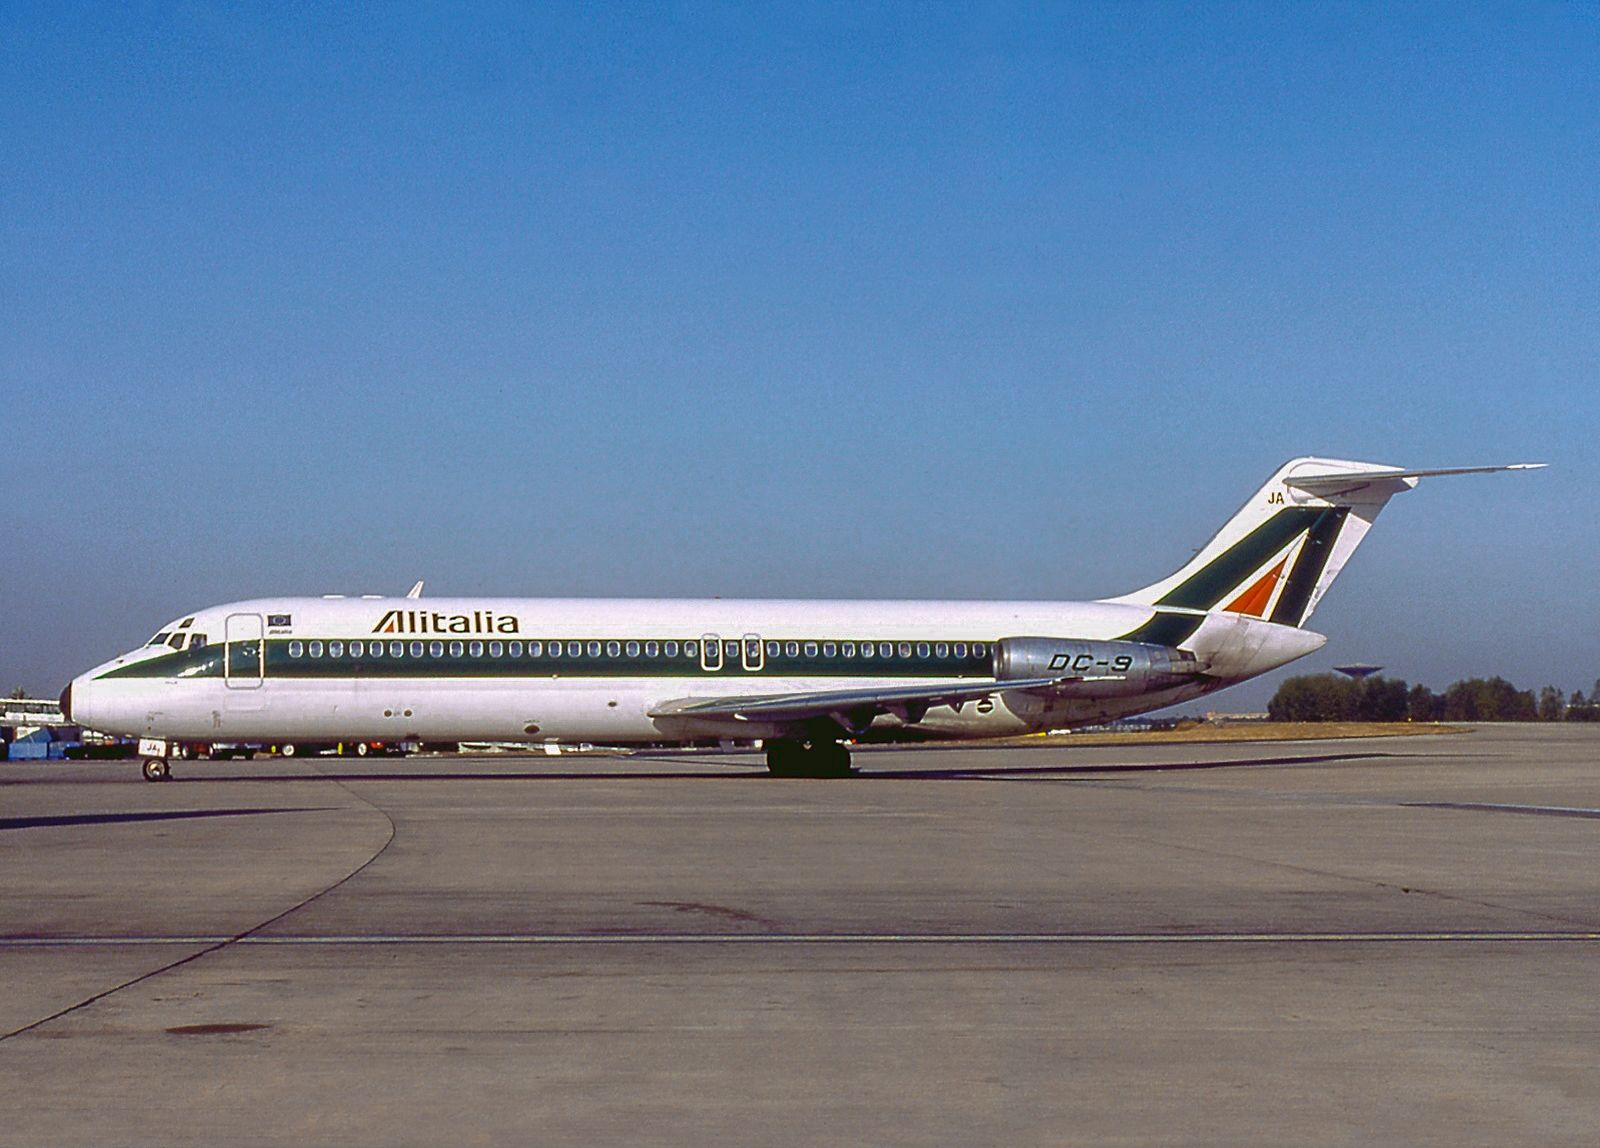 McDonnell_Douglas_DC-9-32,_Alitalia_AN0592514